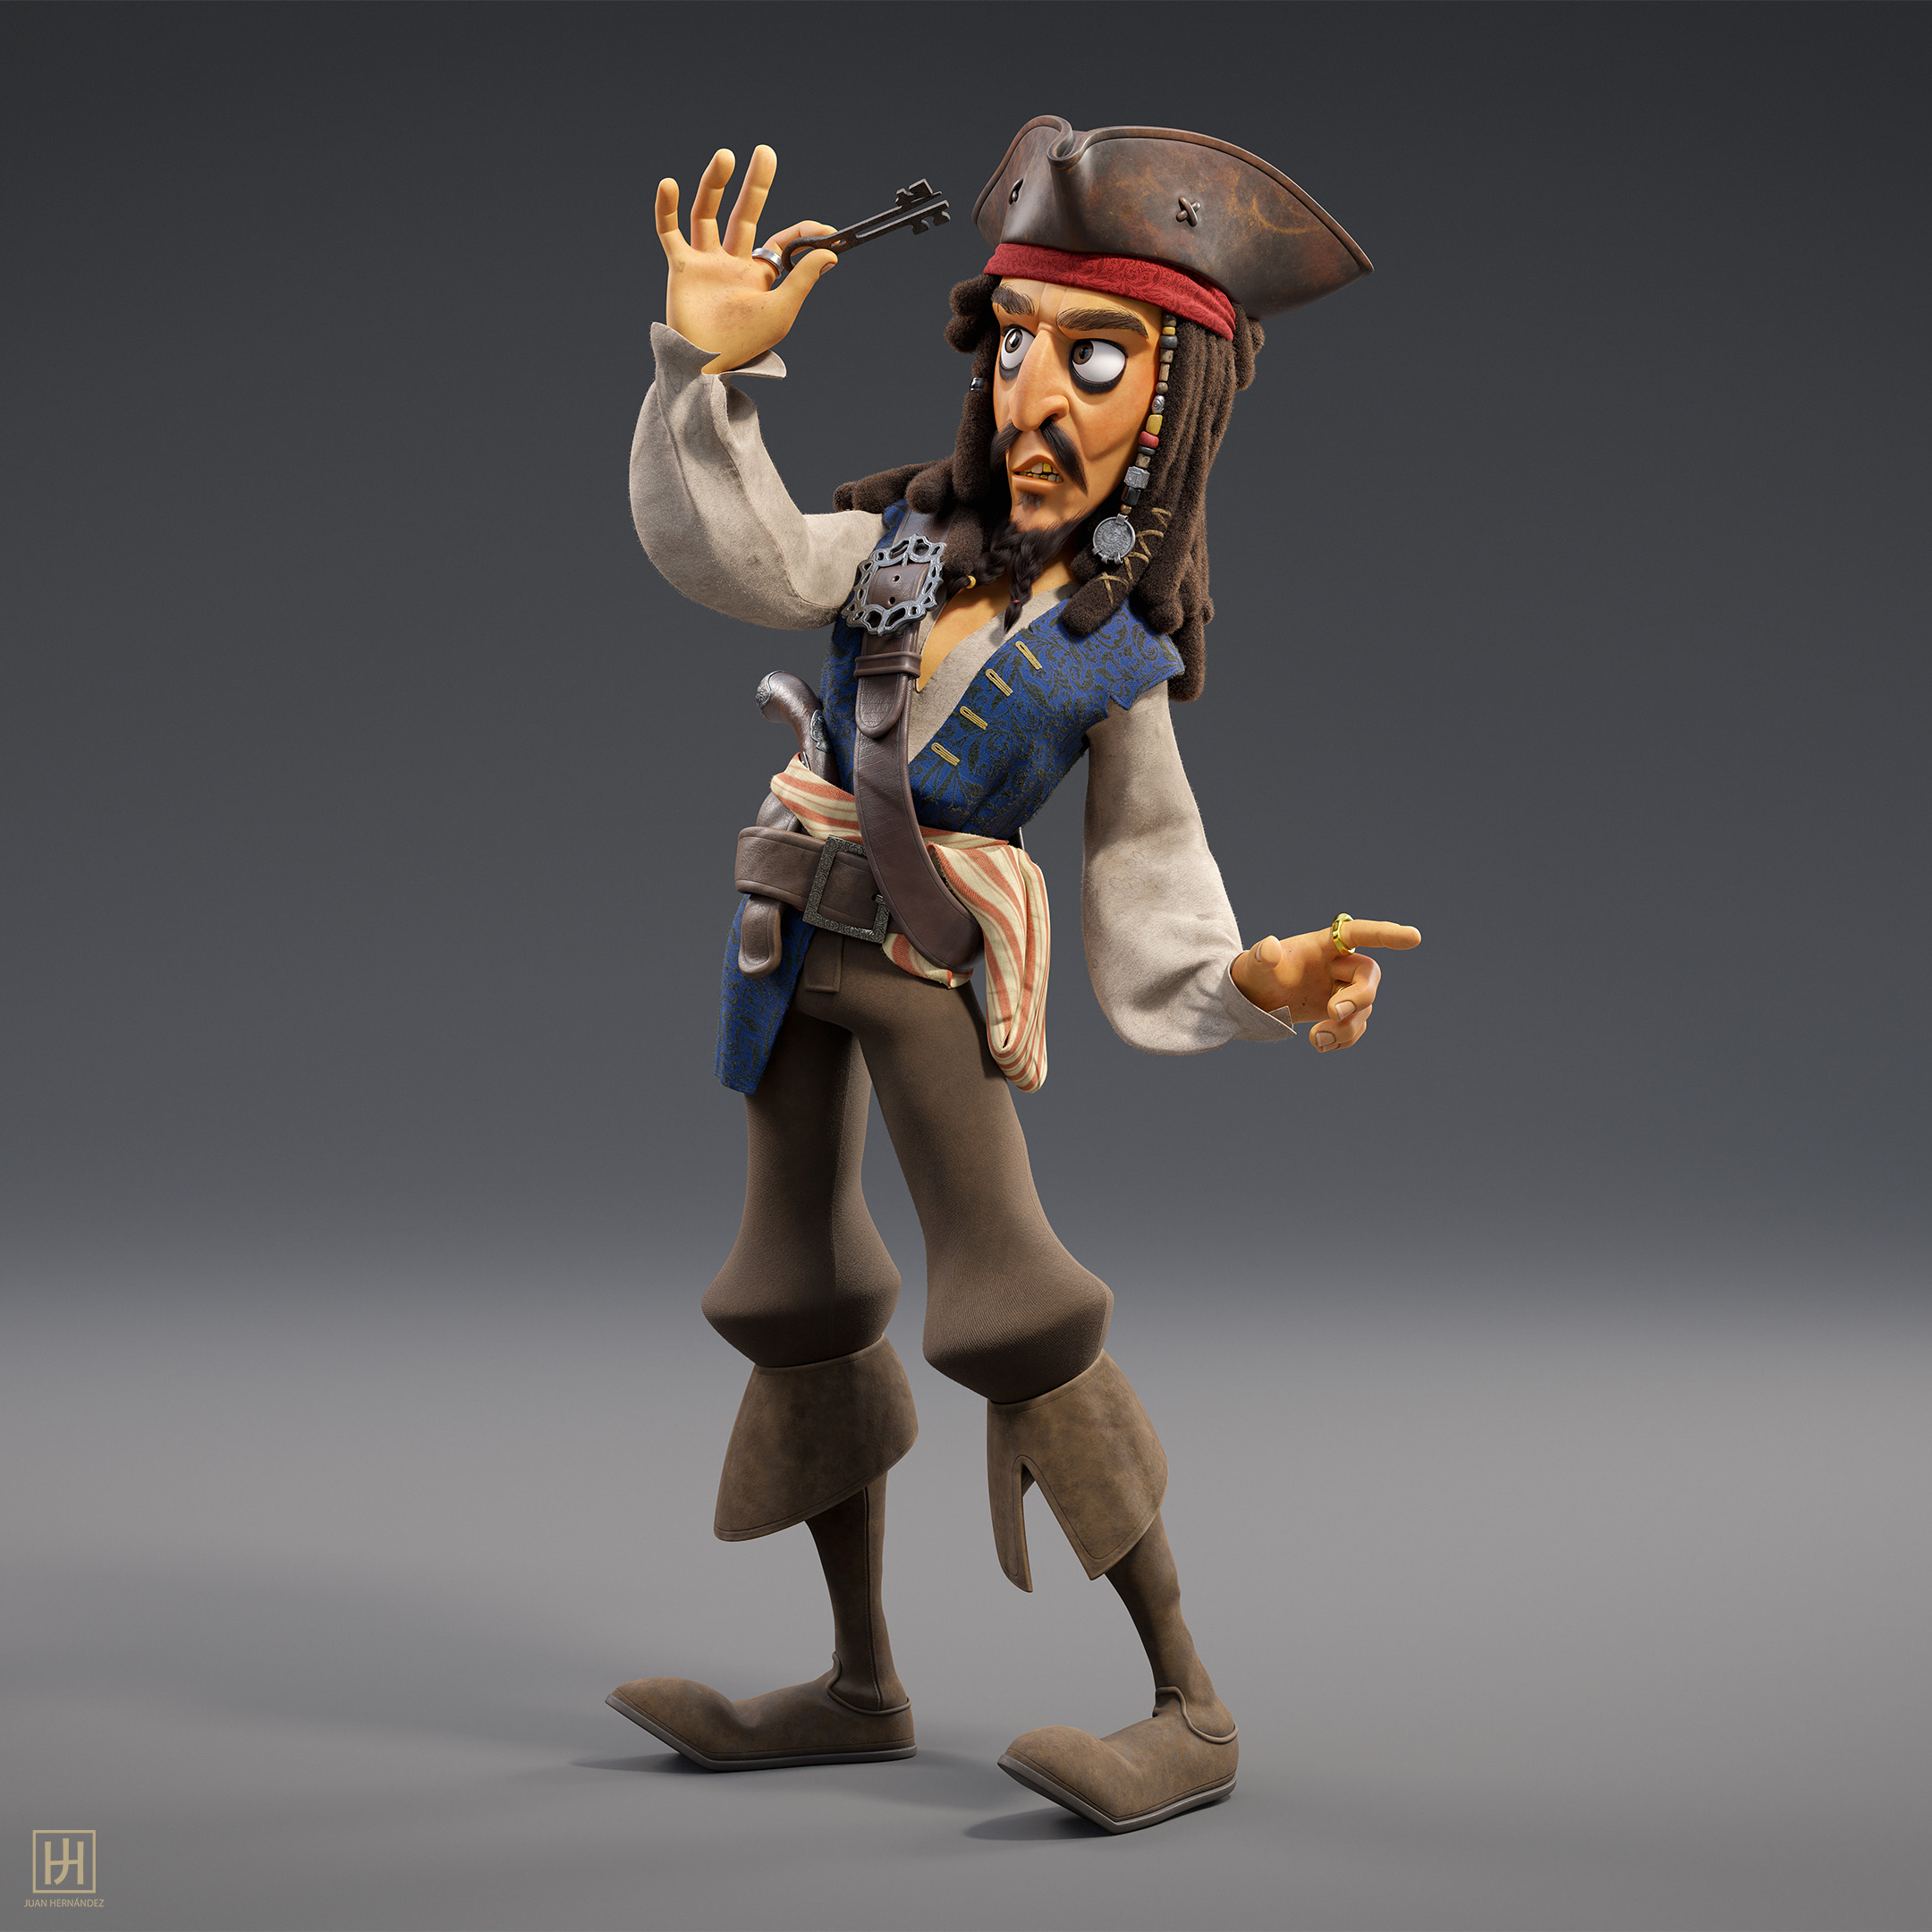 Stylized Jack Sparrow - Finished Projects - Blender Artists Community